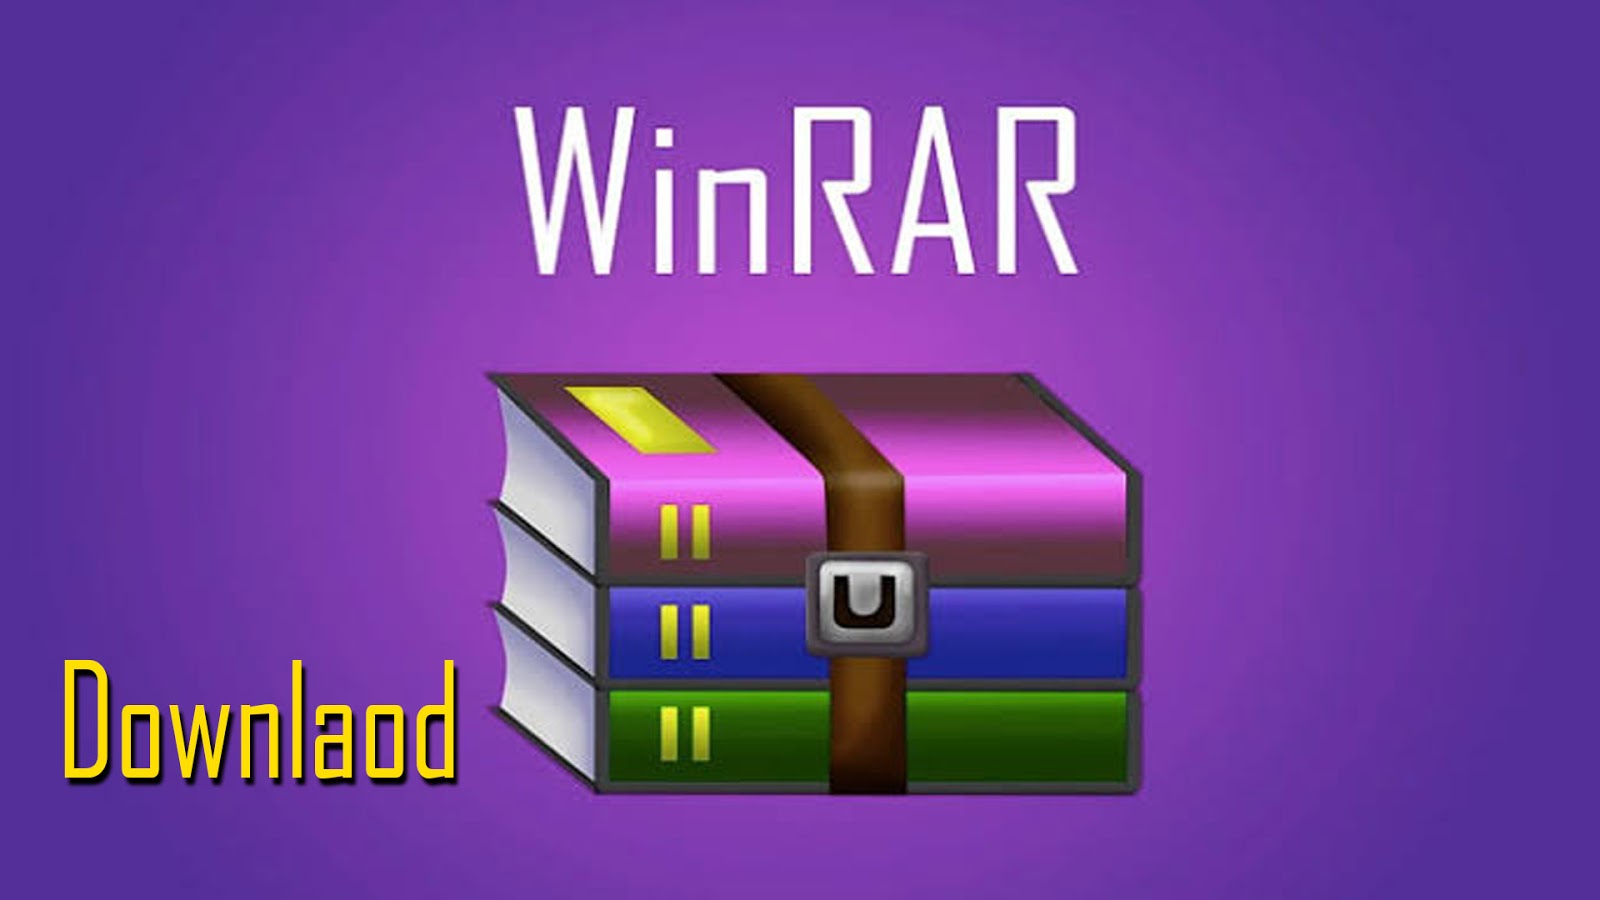 winrar download windows 8 64 bit gratis